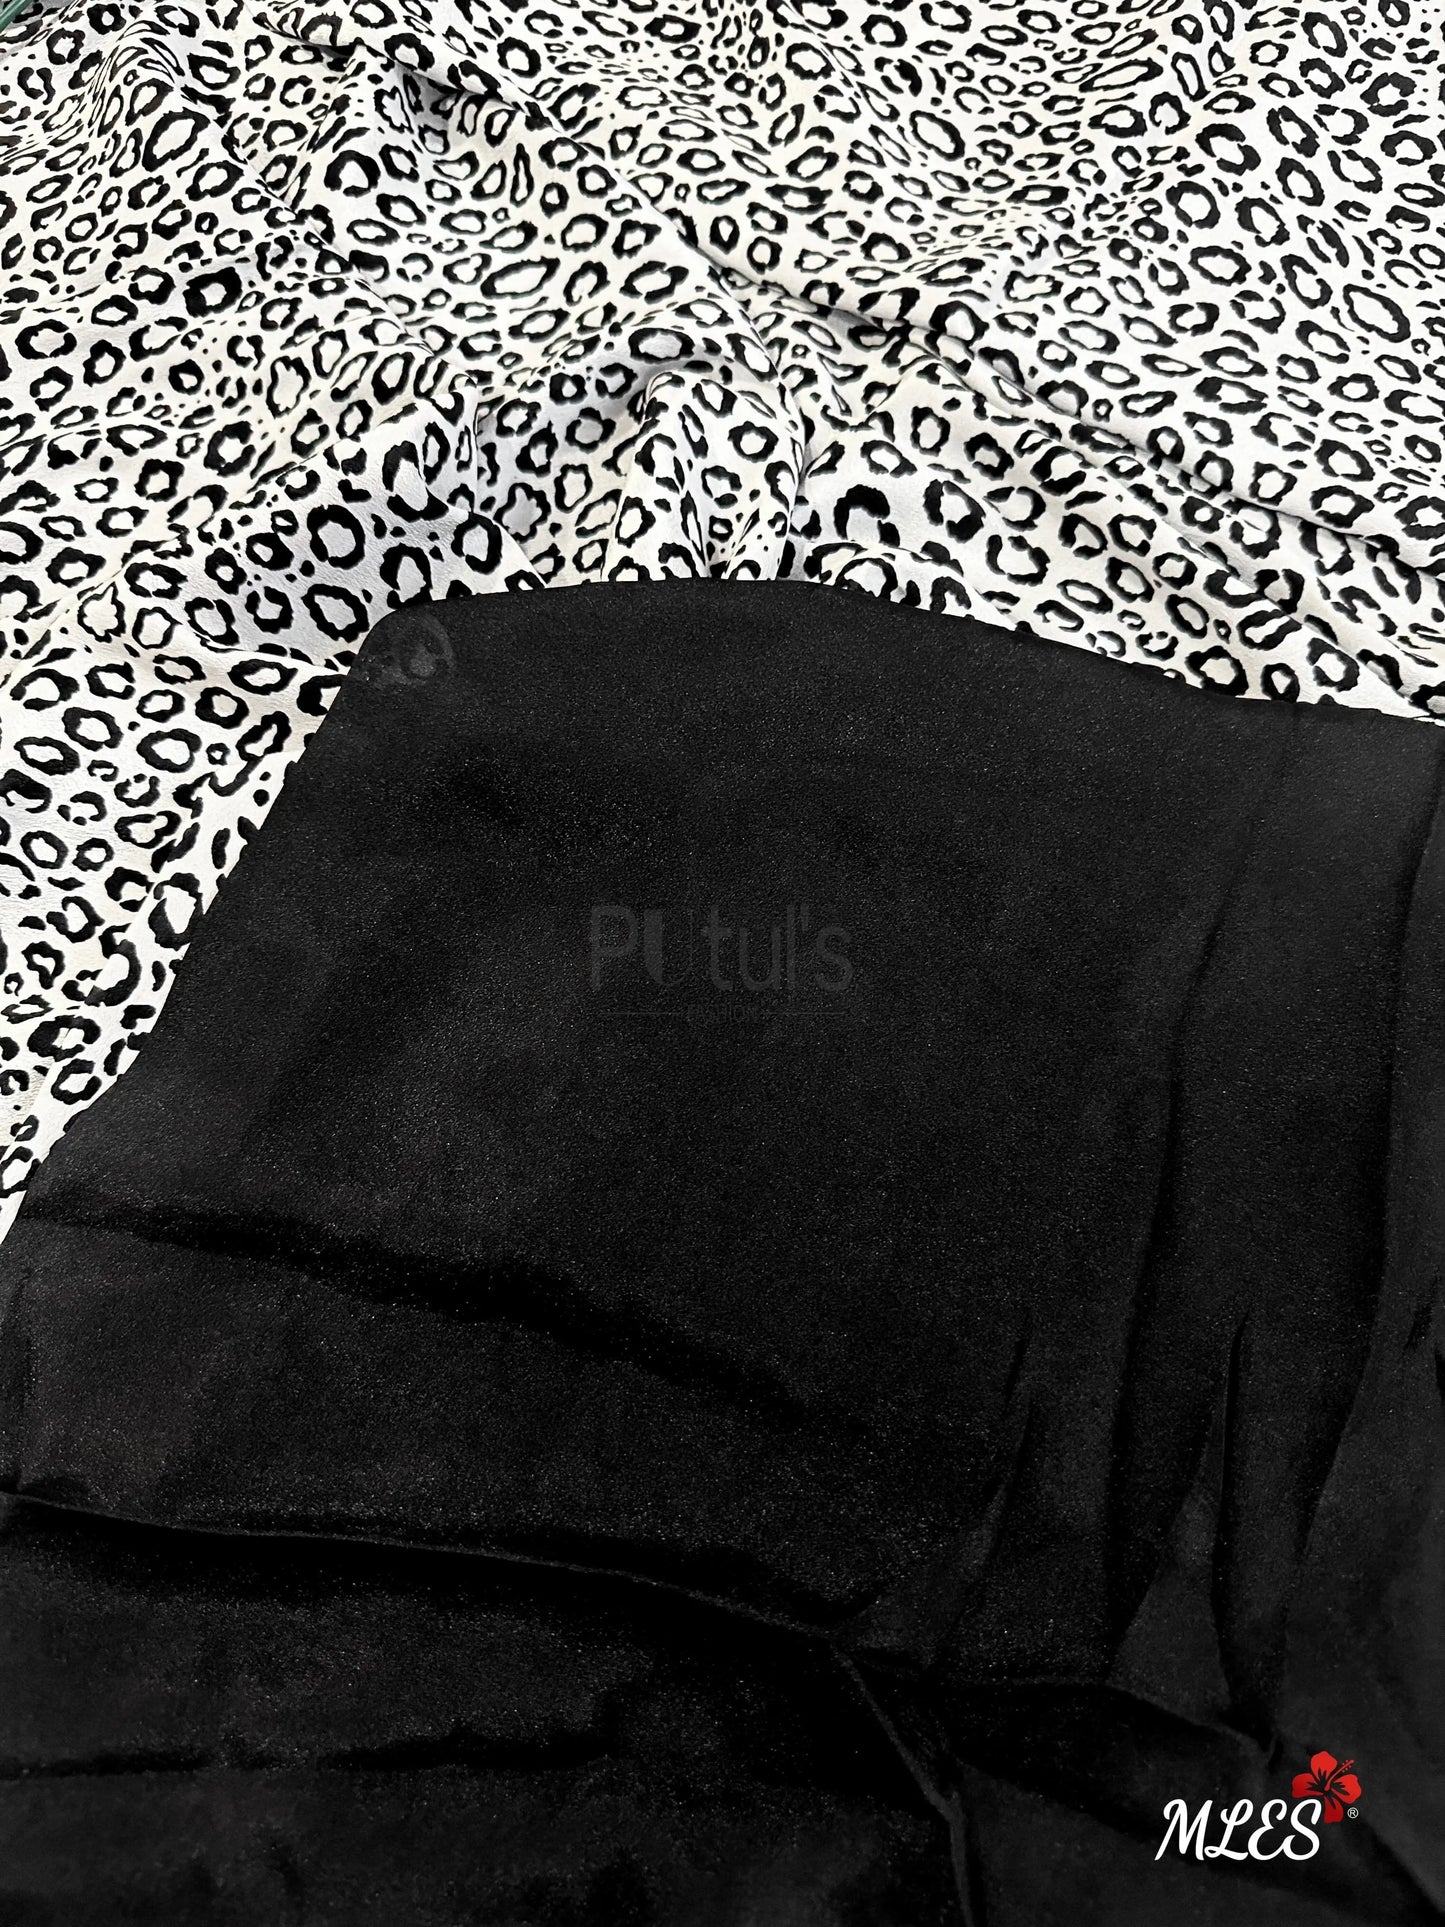 Black and white satin silk saree Putul's Fashion